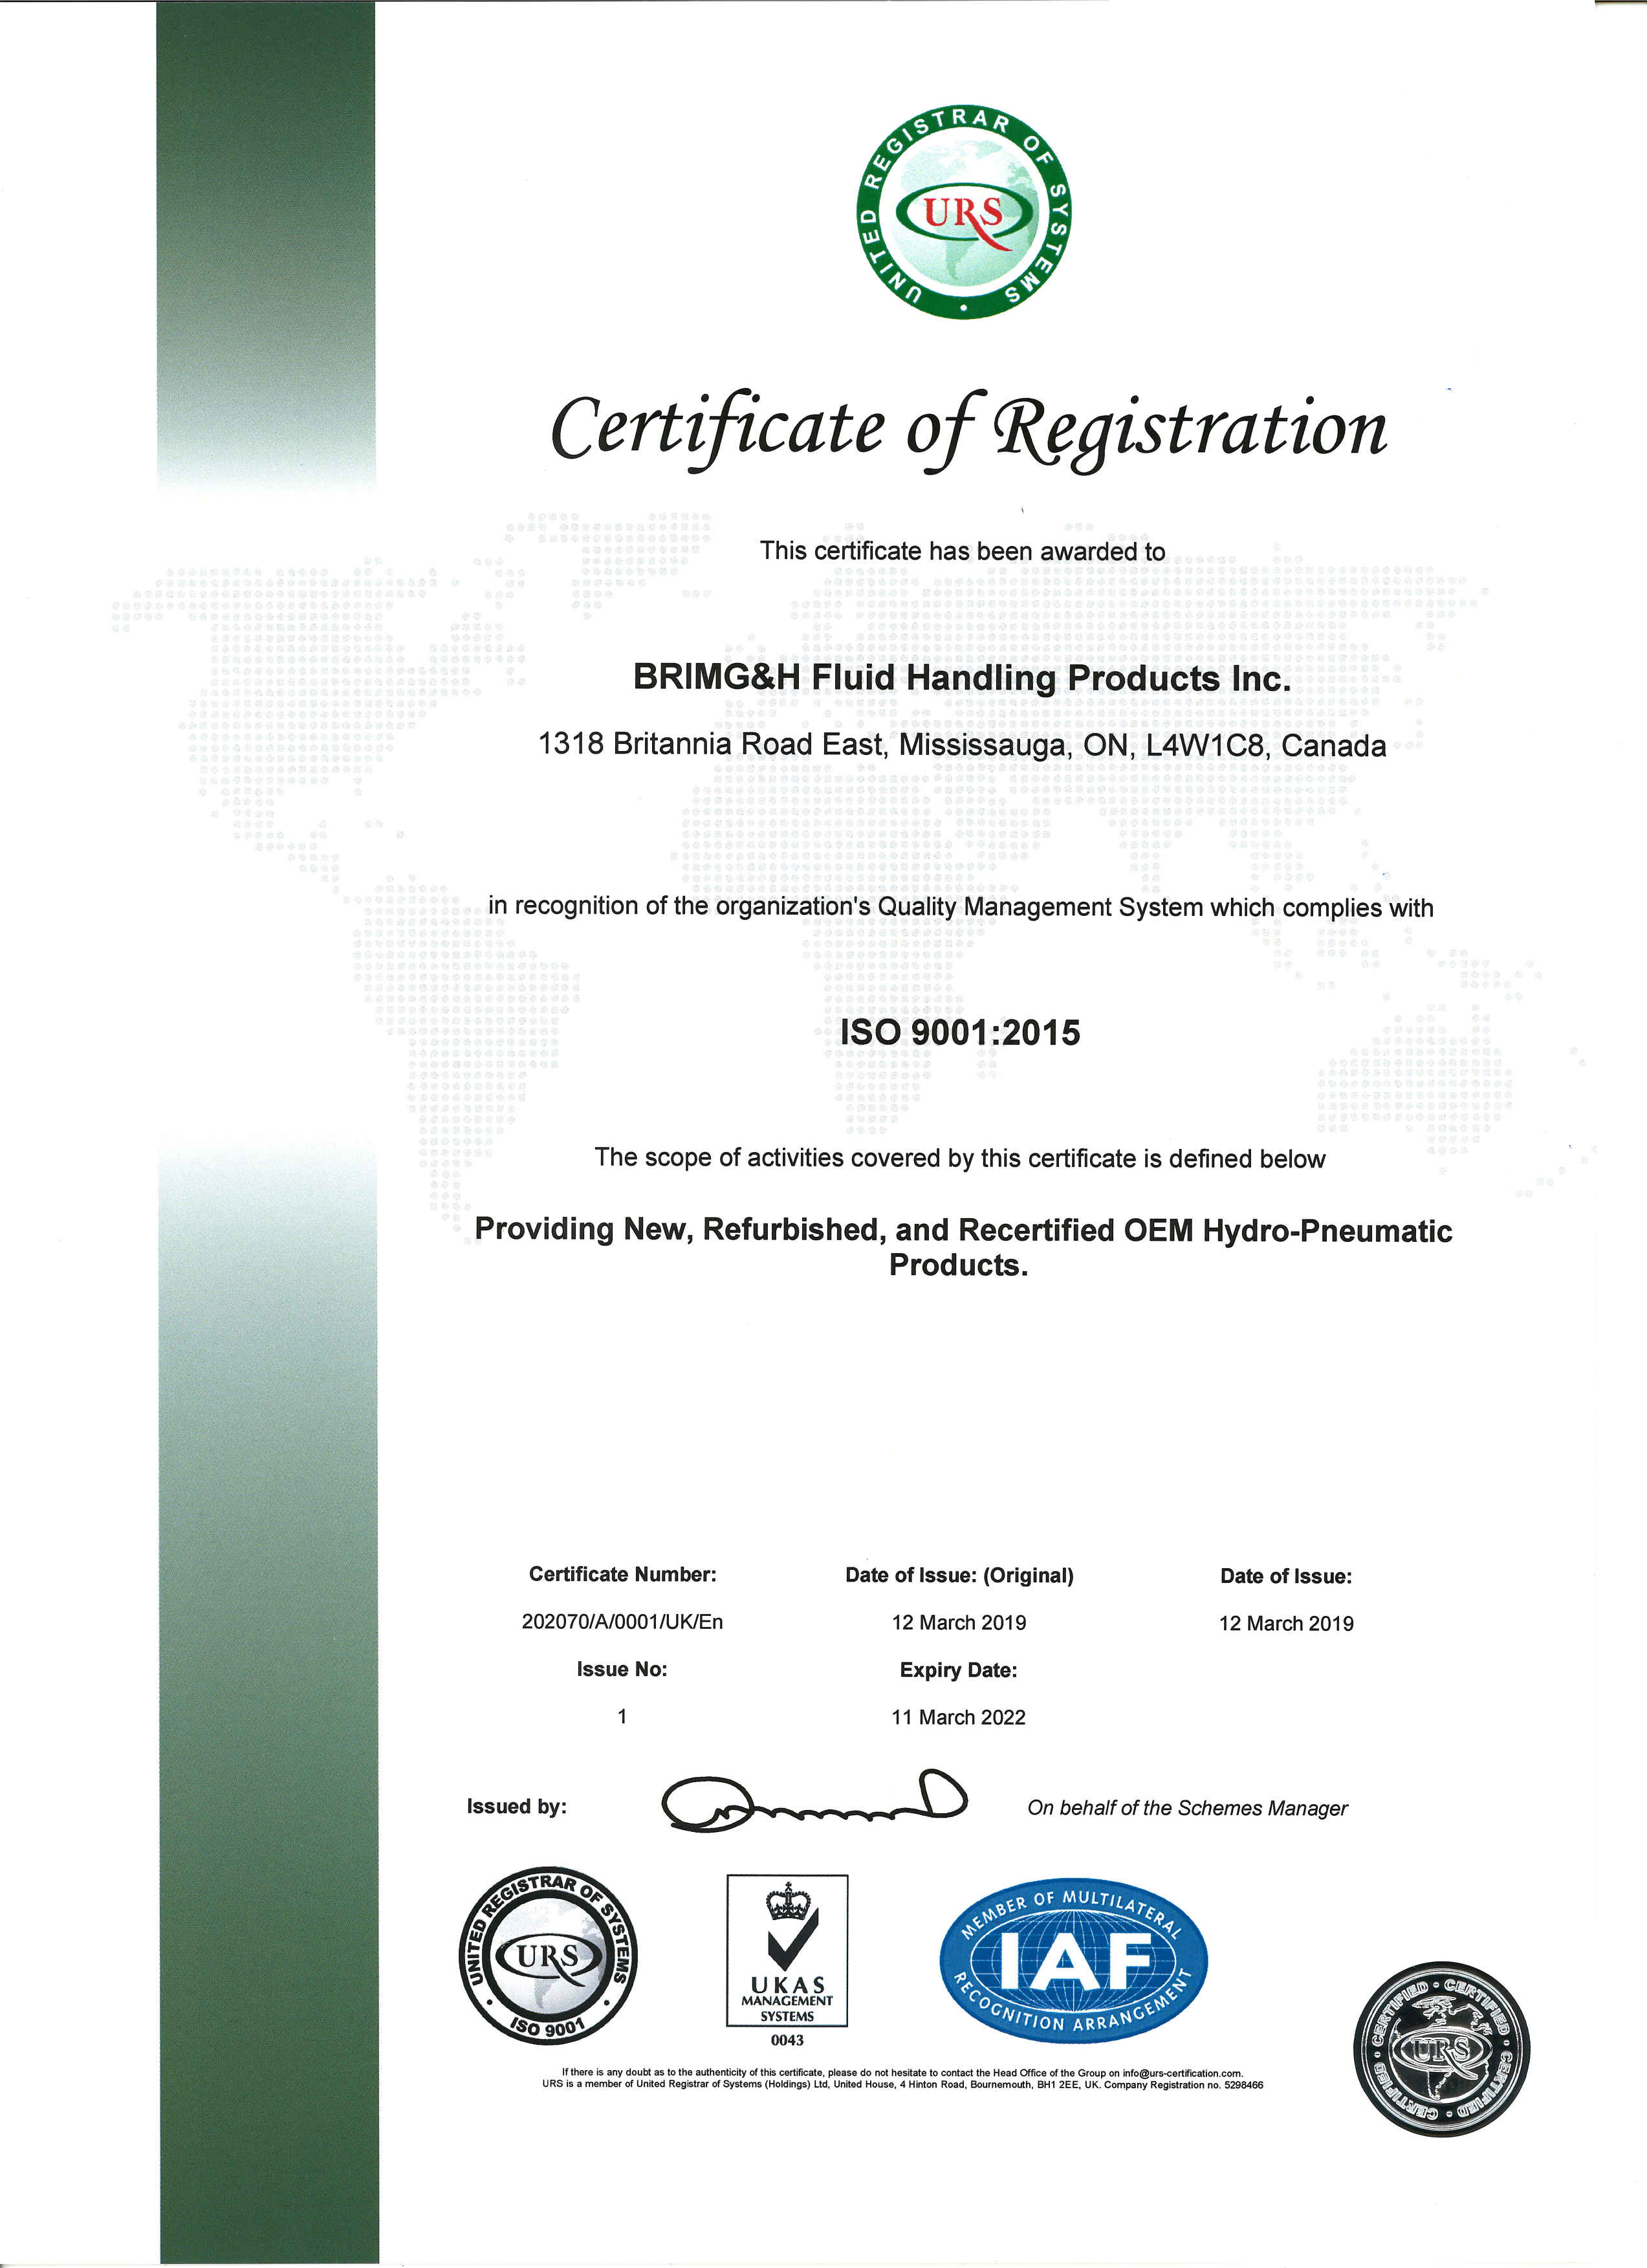 Brim G&H ISO Certificate